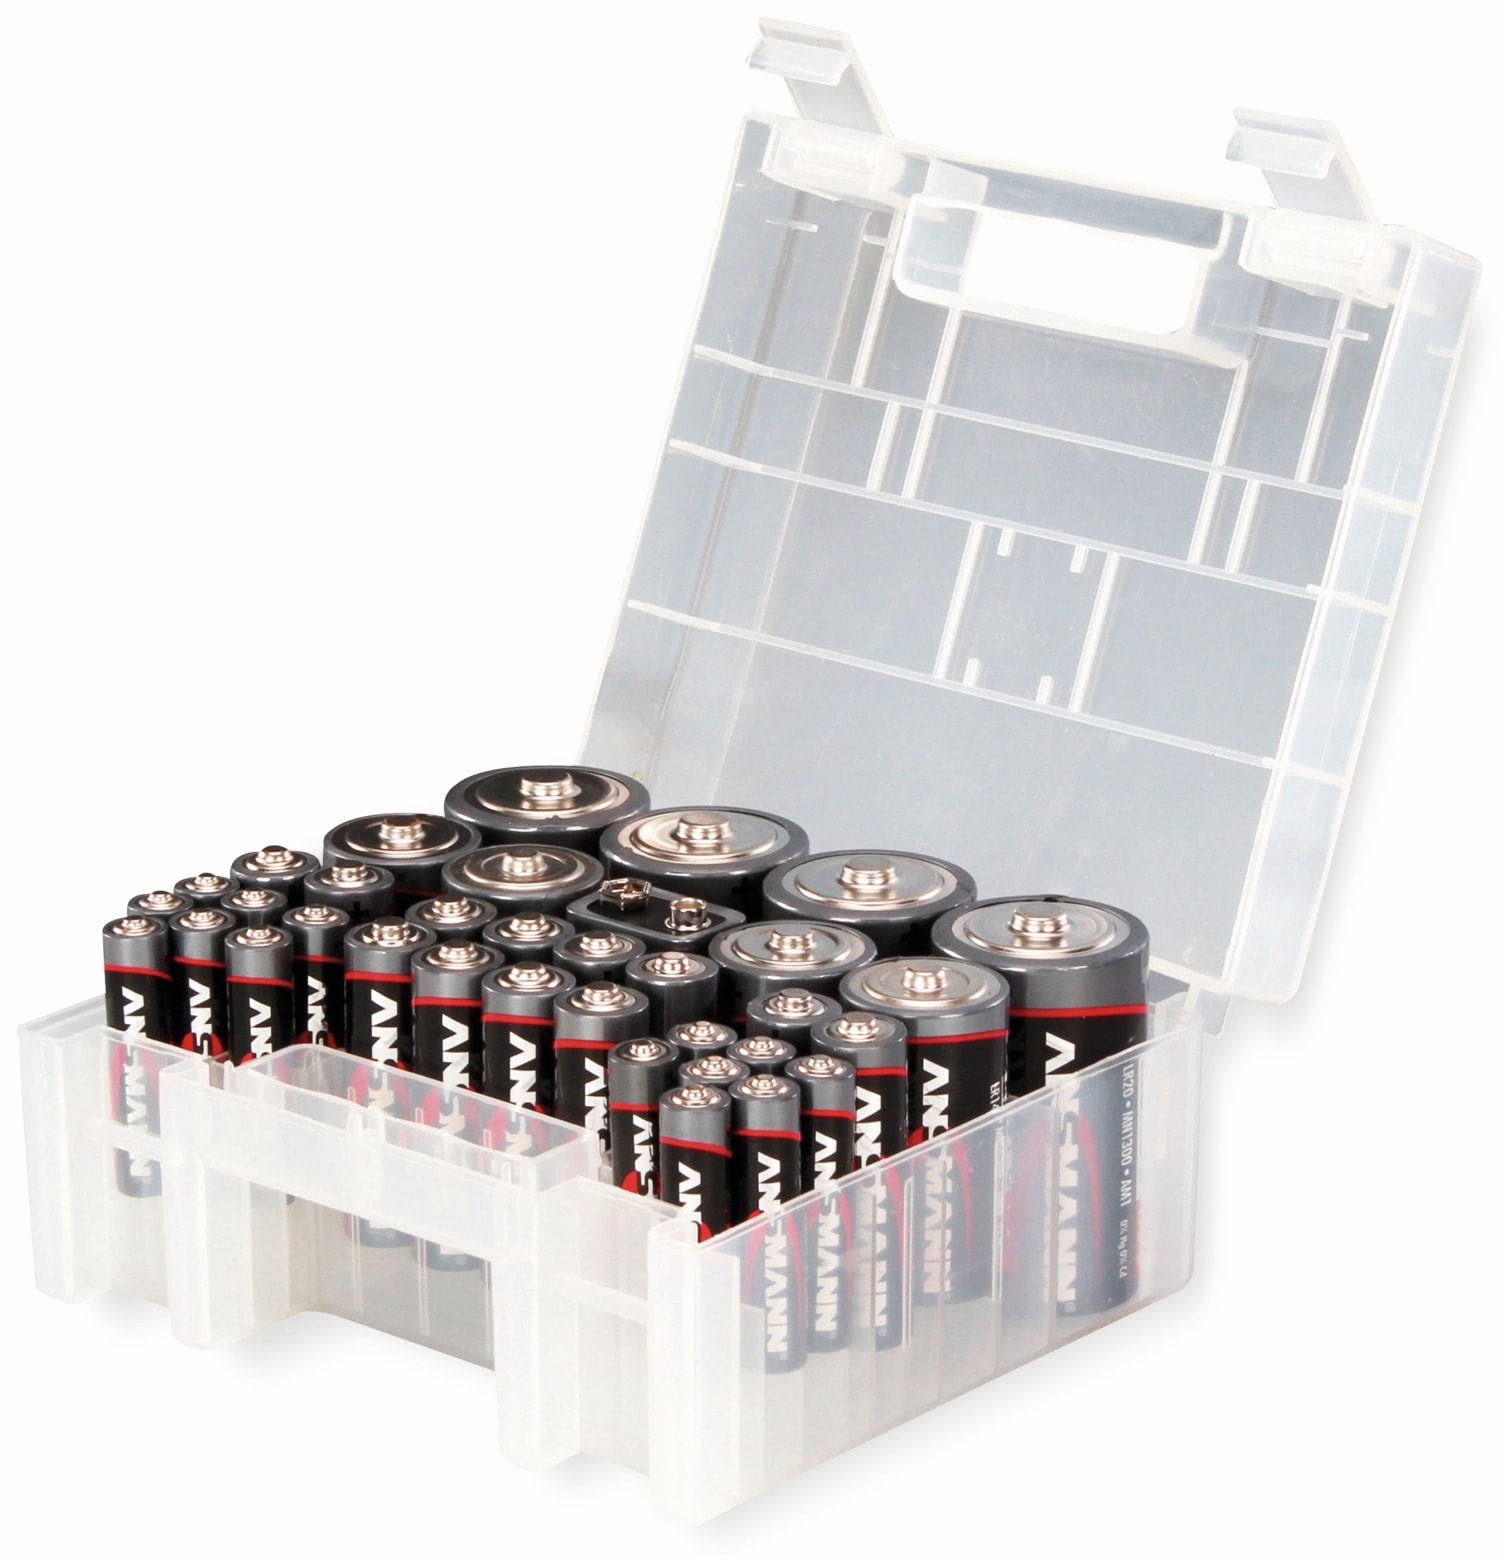 ANSMANN Batteriebox 35 inkl. Alkaline-Batterien Sortiment